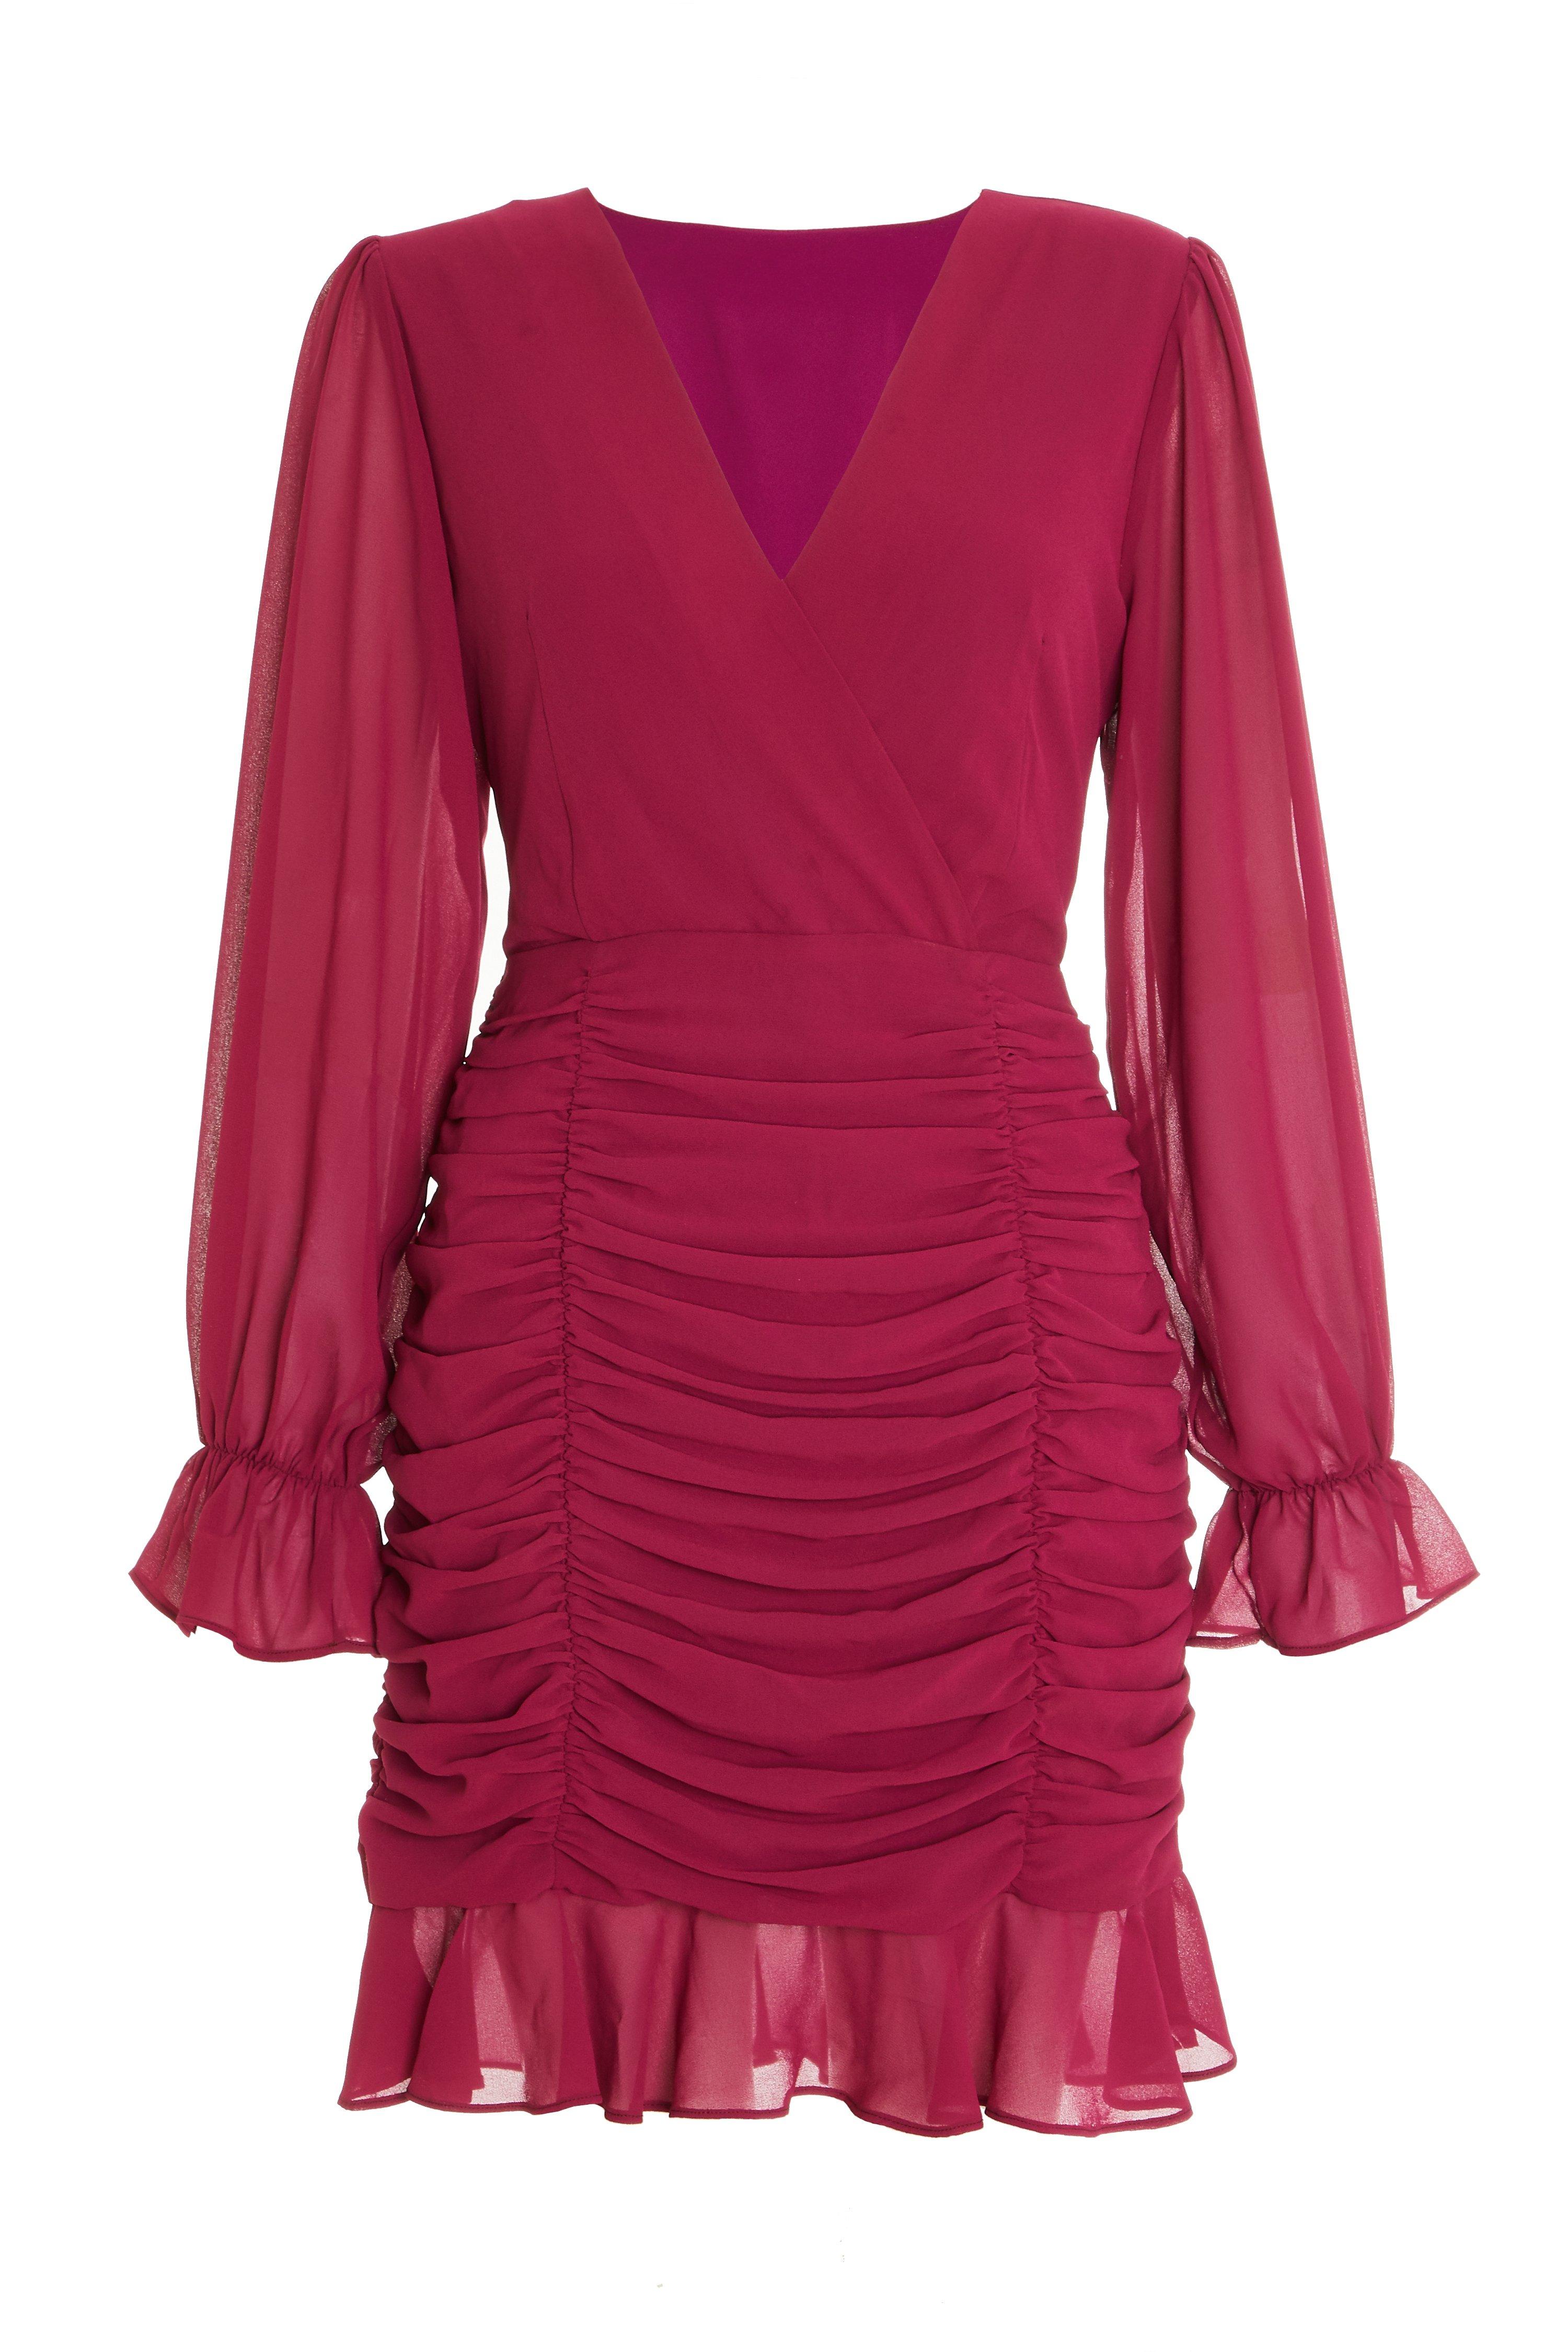 Berry Chiffon Long Sleeve Wrap Dress - Quiz Clothing